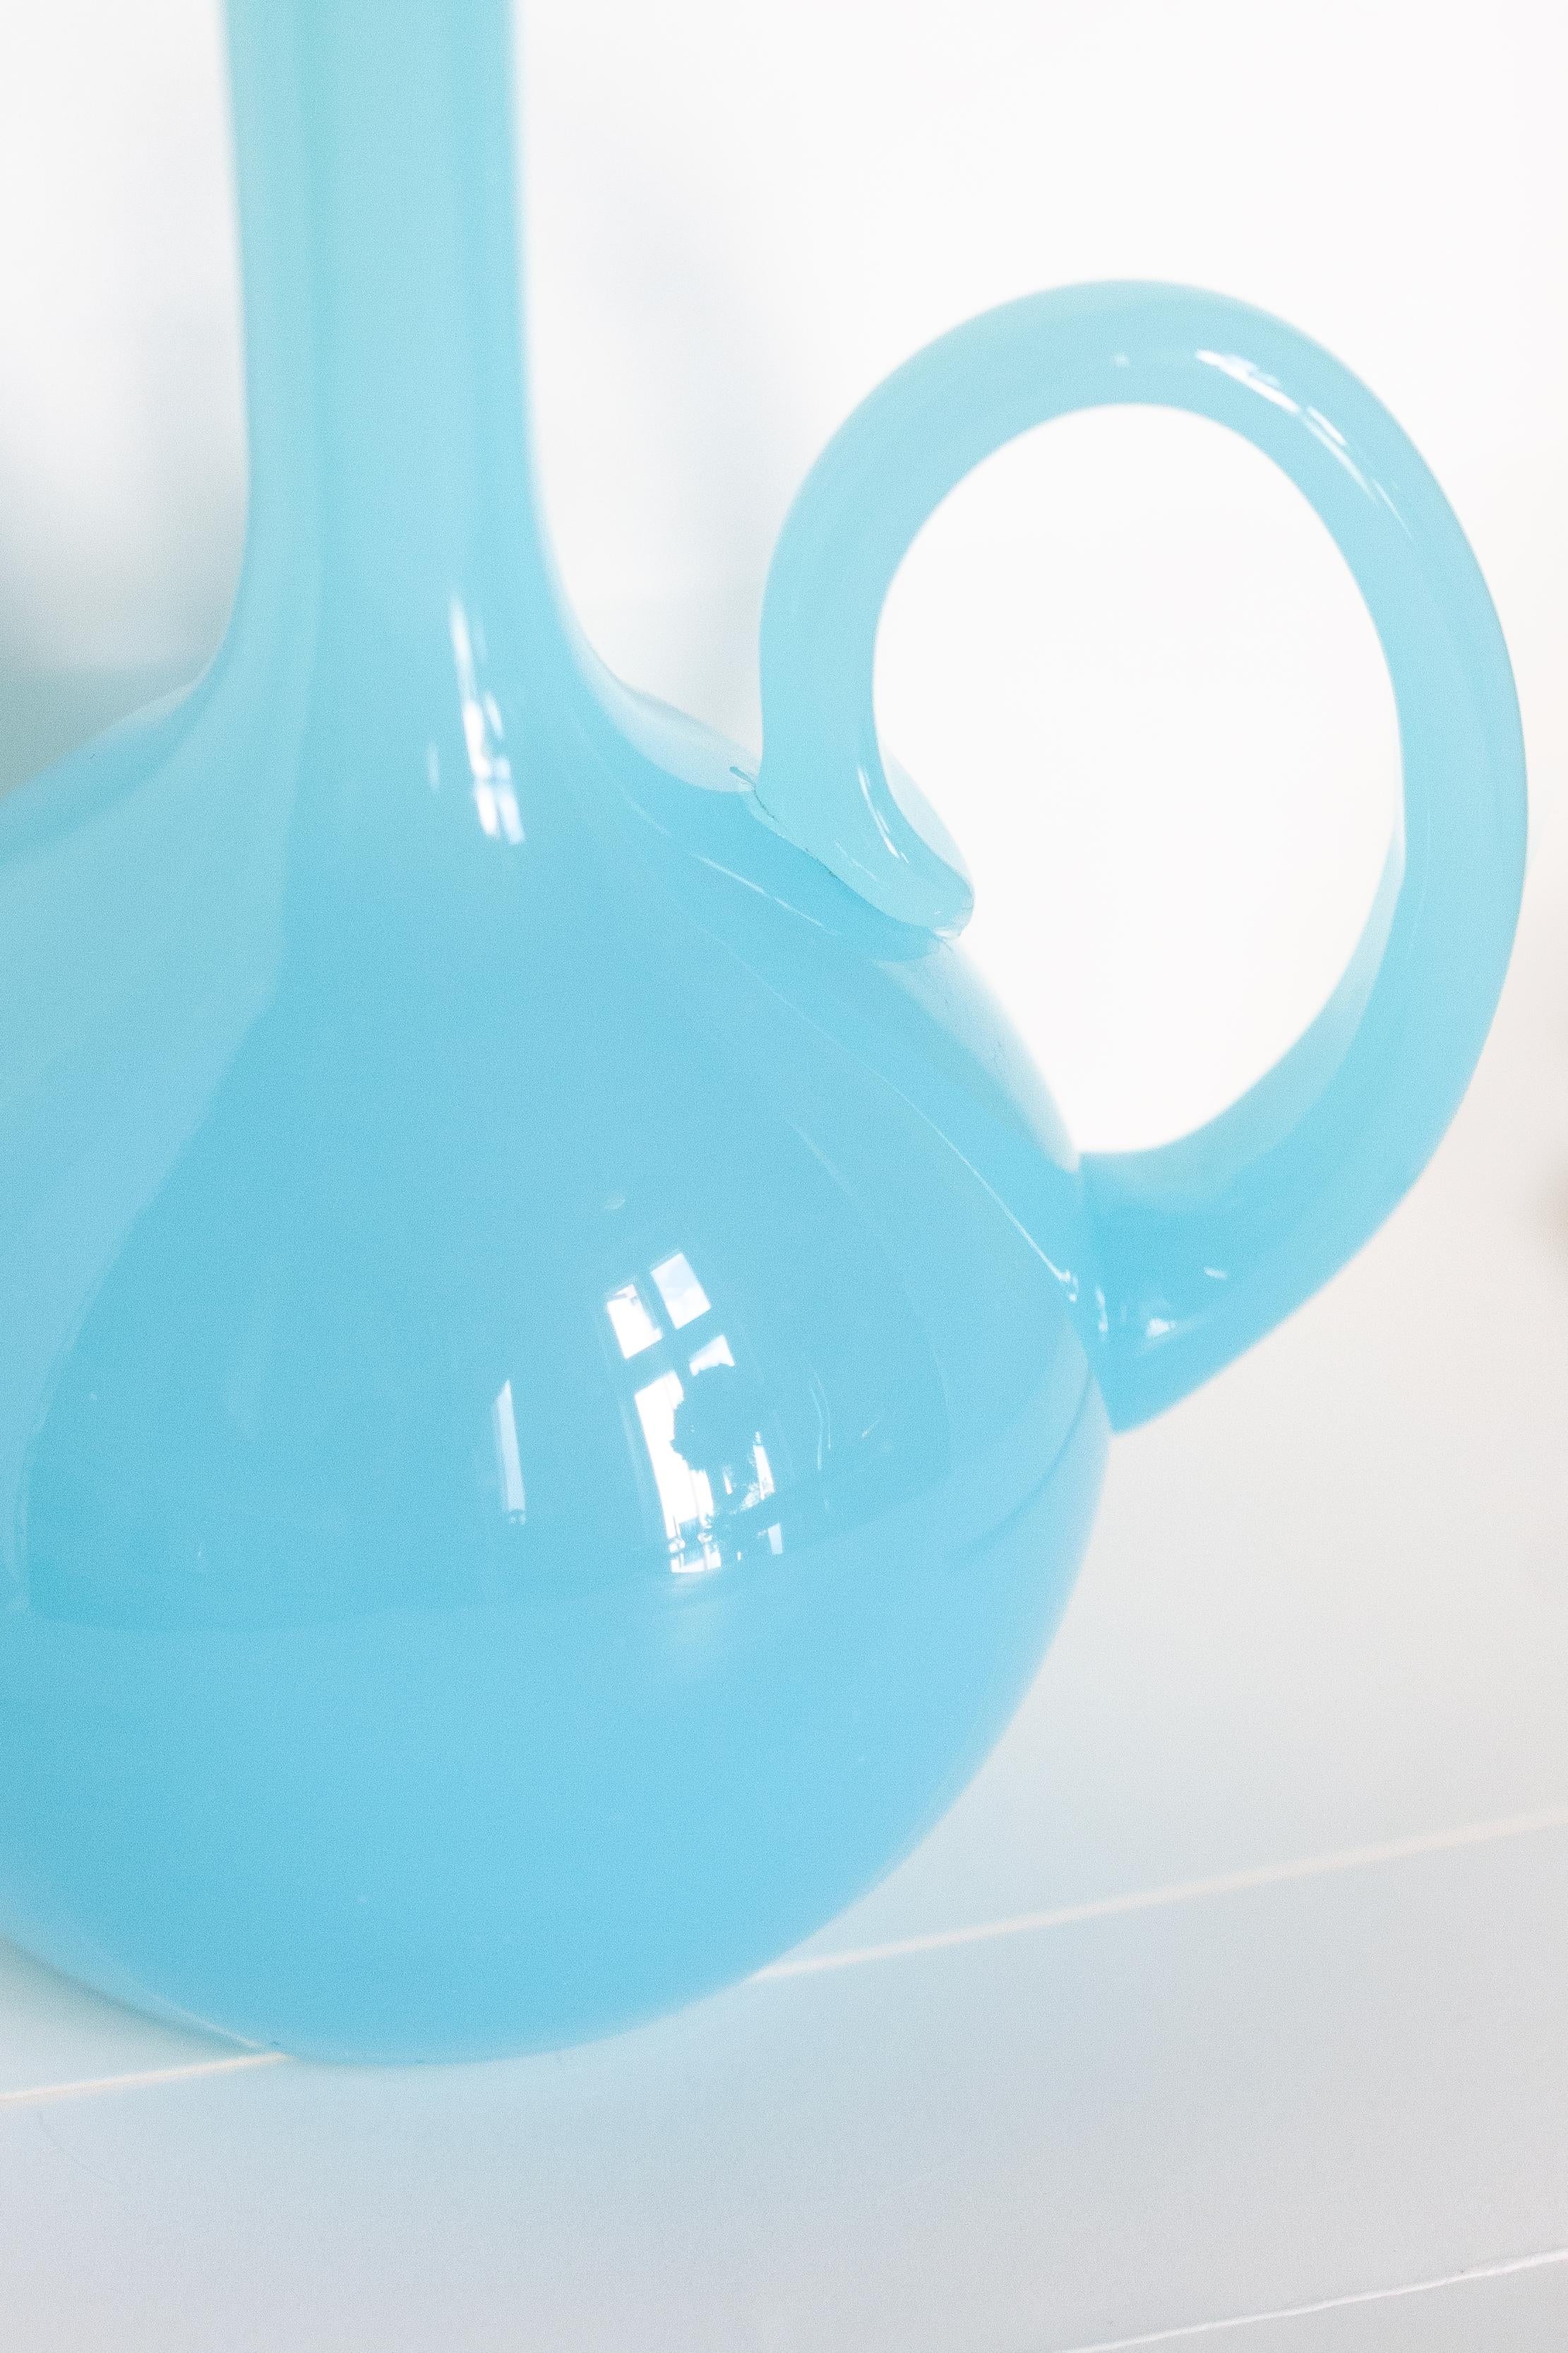 Mid Century Blue Decorative Glass Vase, Europe, 1960s For Sale 3